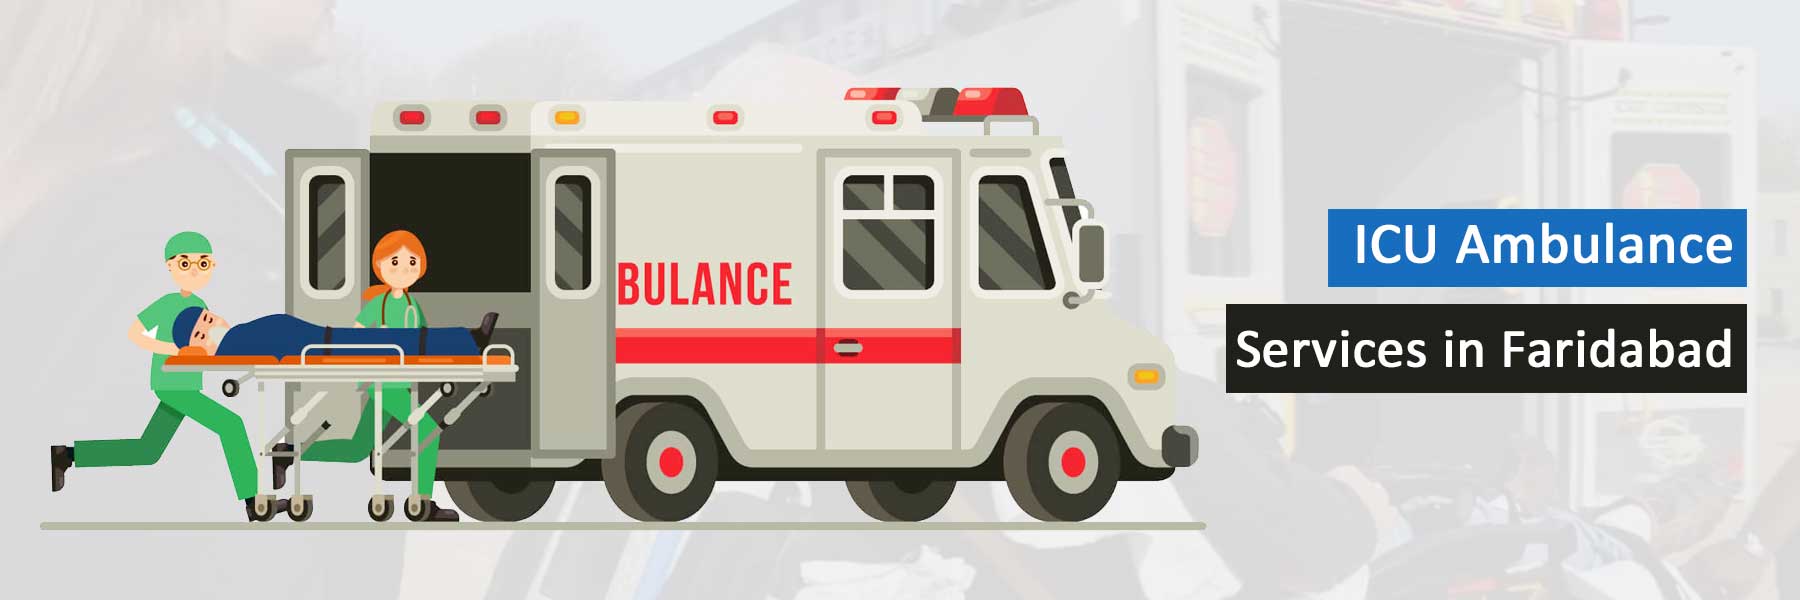 ICU Ambulance Services in Faridabad